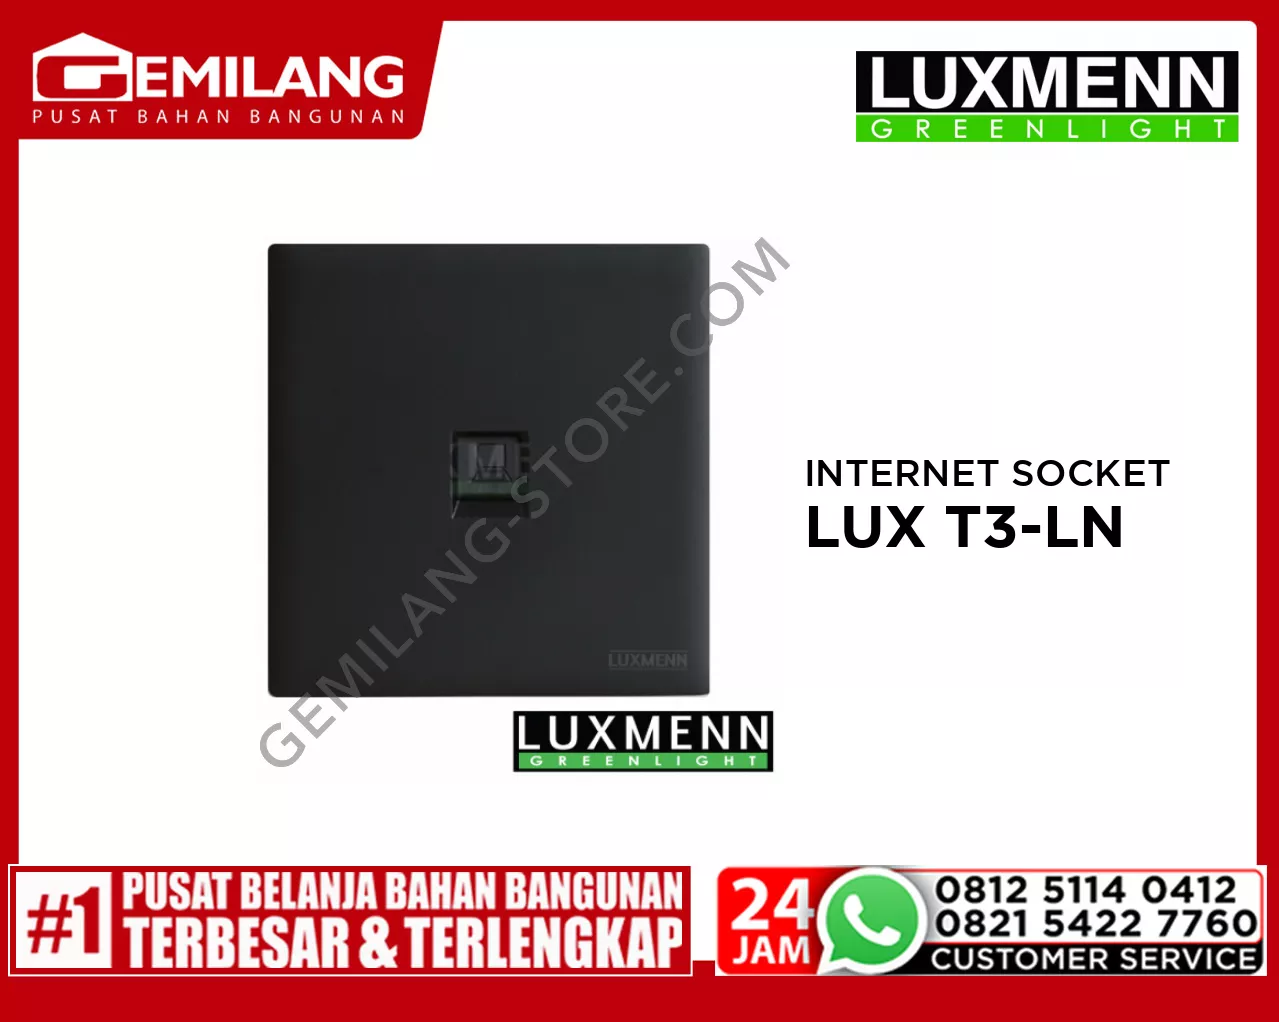 LUXMENN INTERNET SOCKET LUX T3-LN BLACK